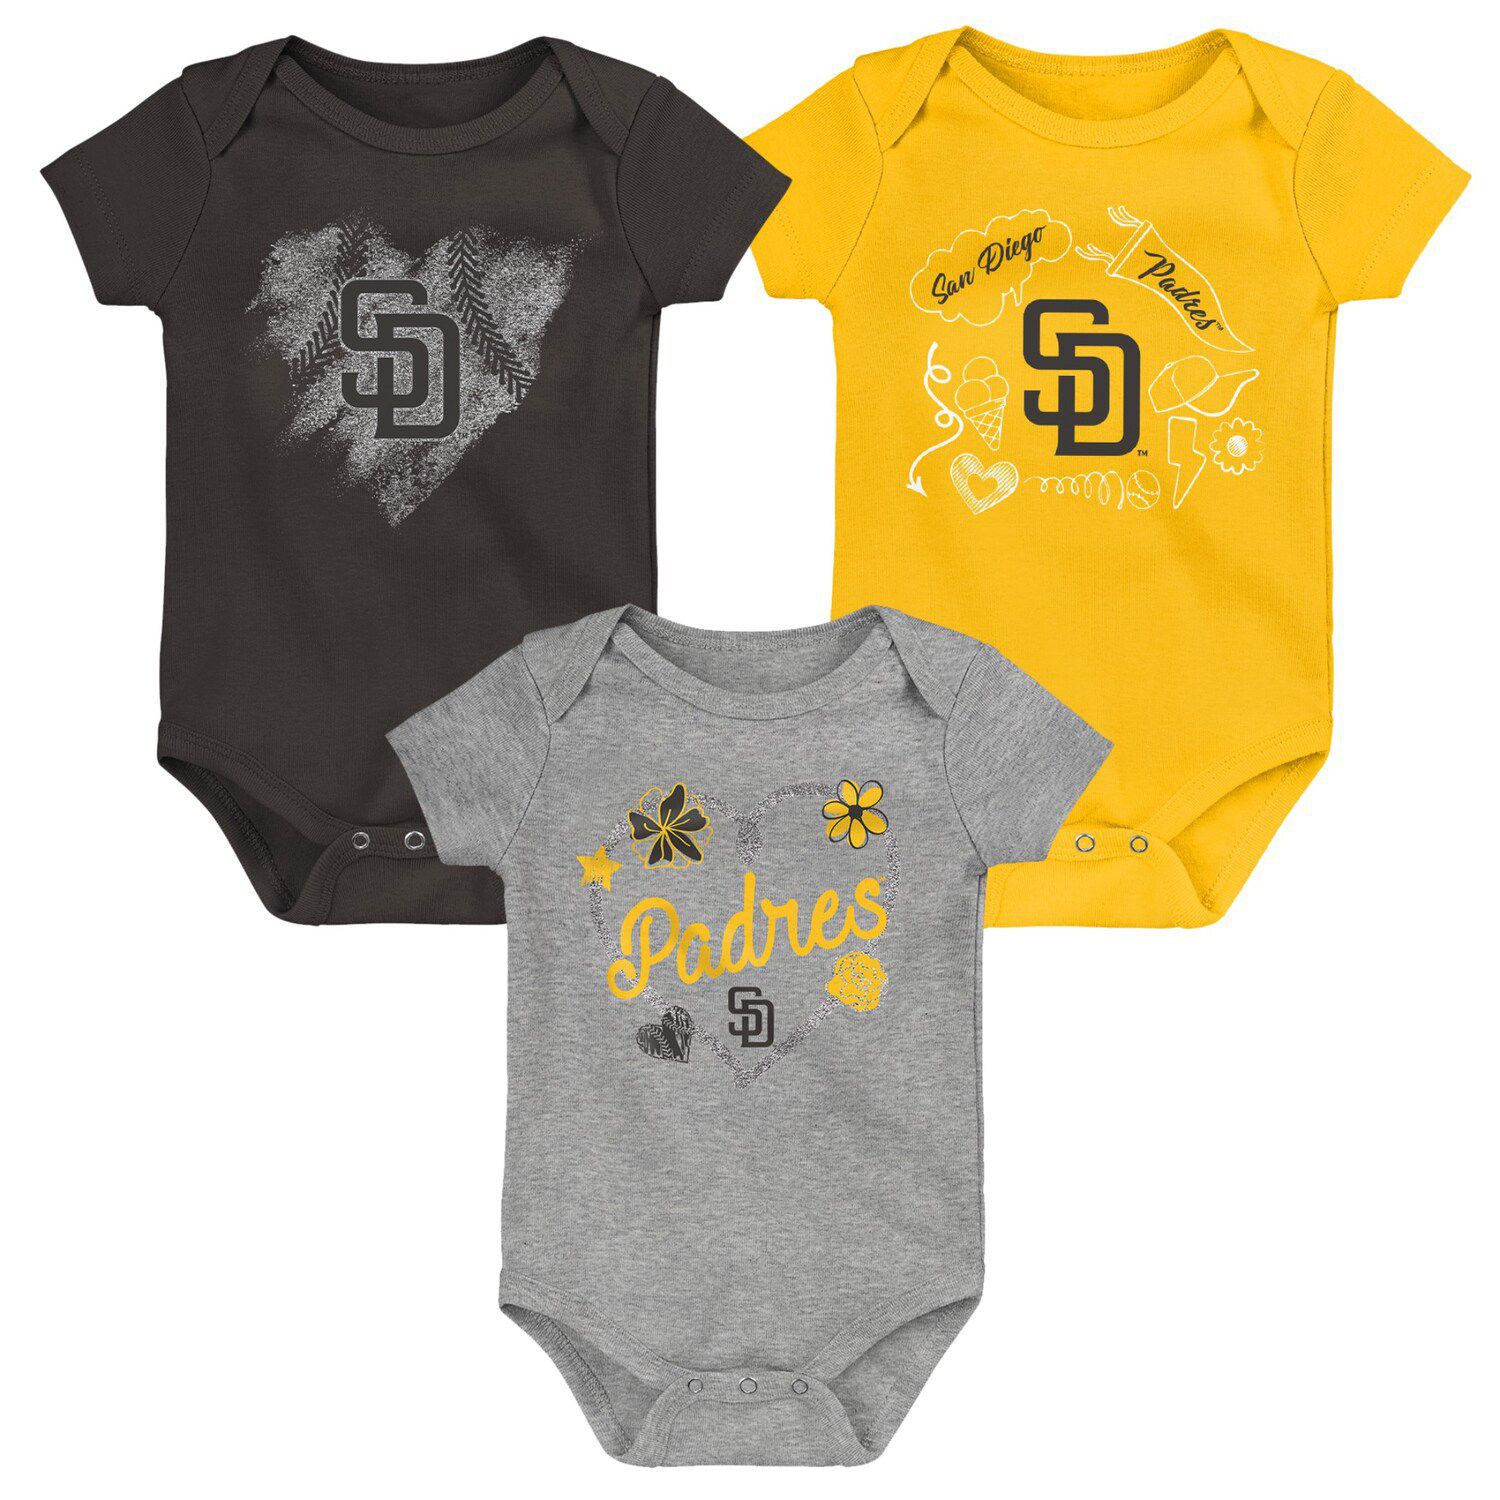 Toddler Nike Fernando Tatis Jr. White San Diego Padres 2022 City Connect Name & Number T-Shirt Size: 2T